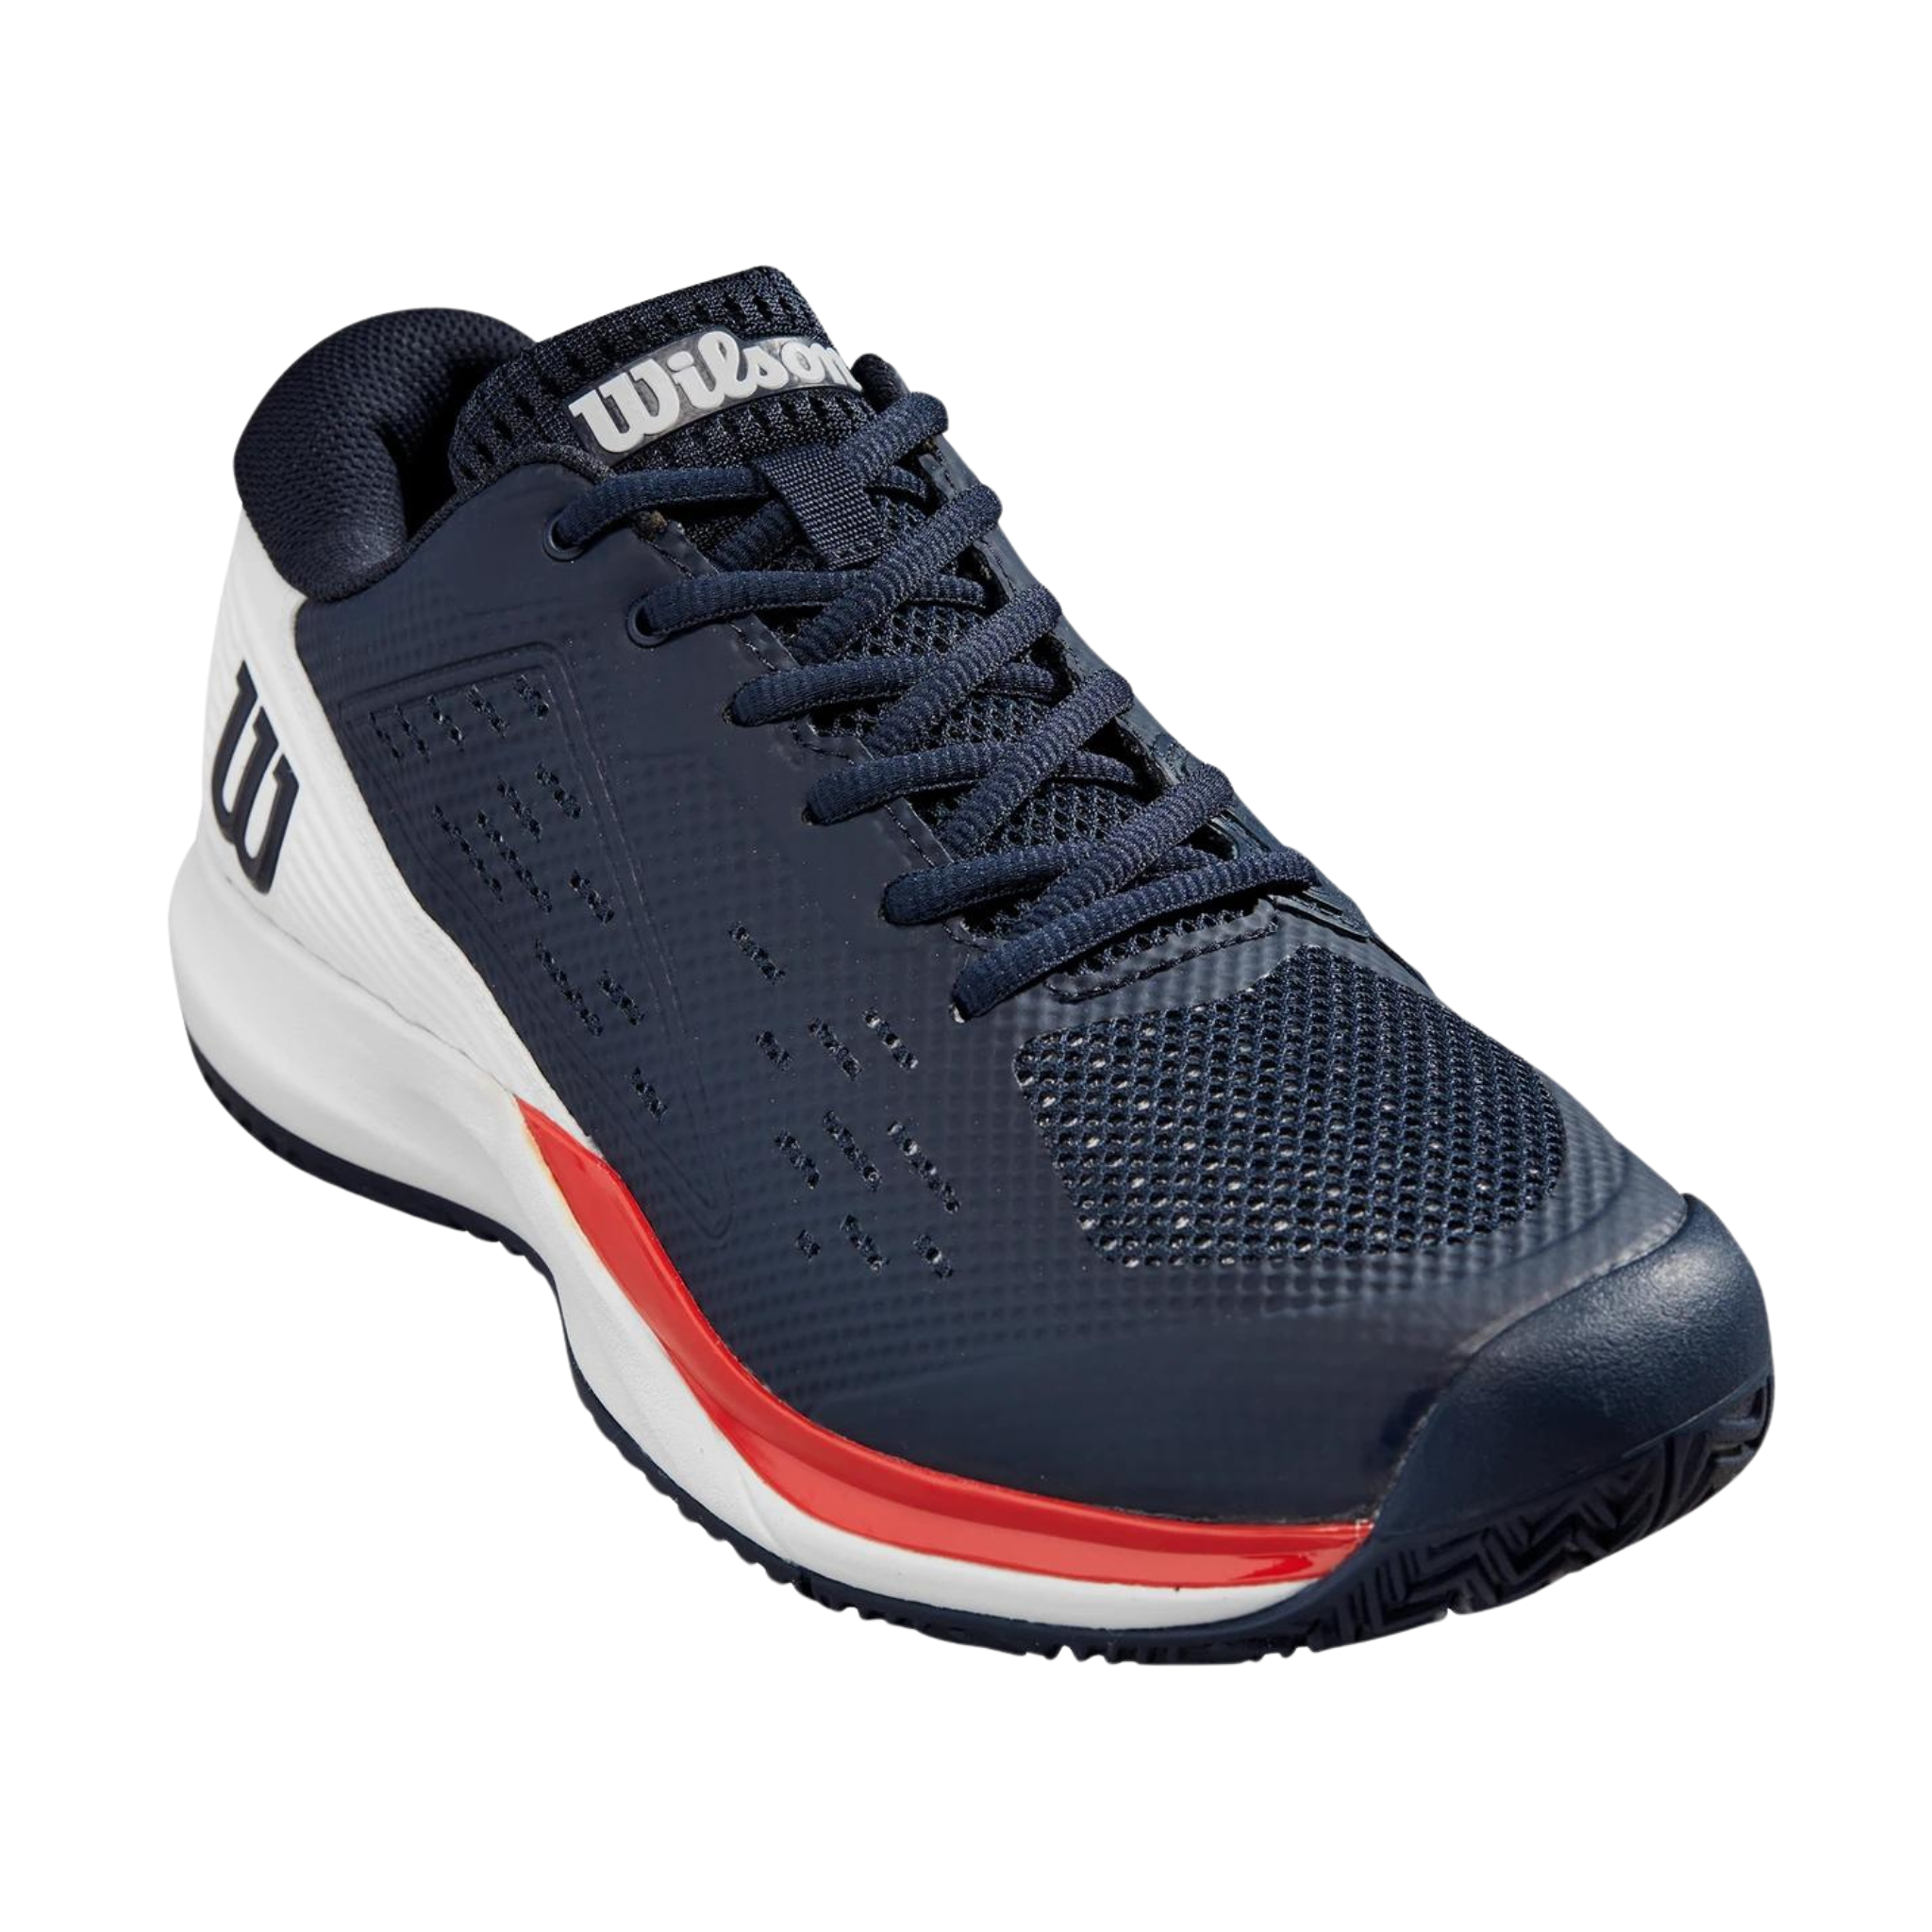 Wilson Rush Pro Ace Men's tennis shoes > Navy Blaze/White/Infrared